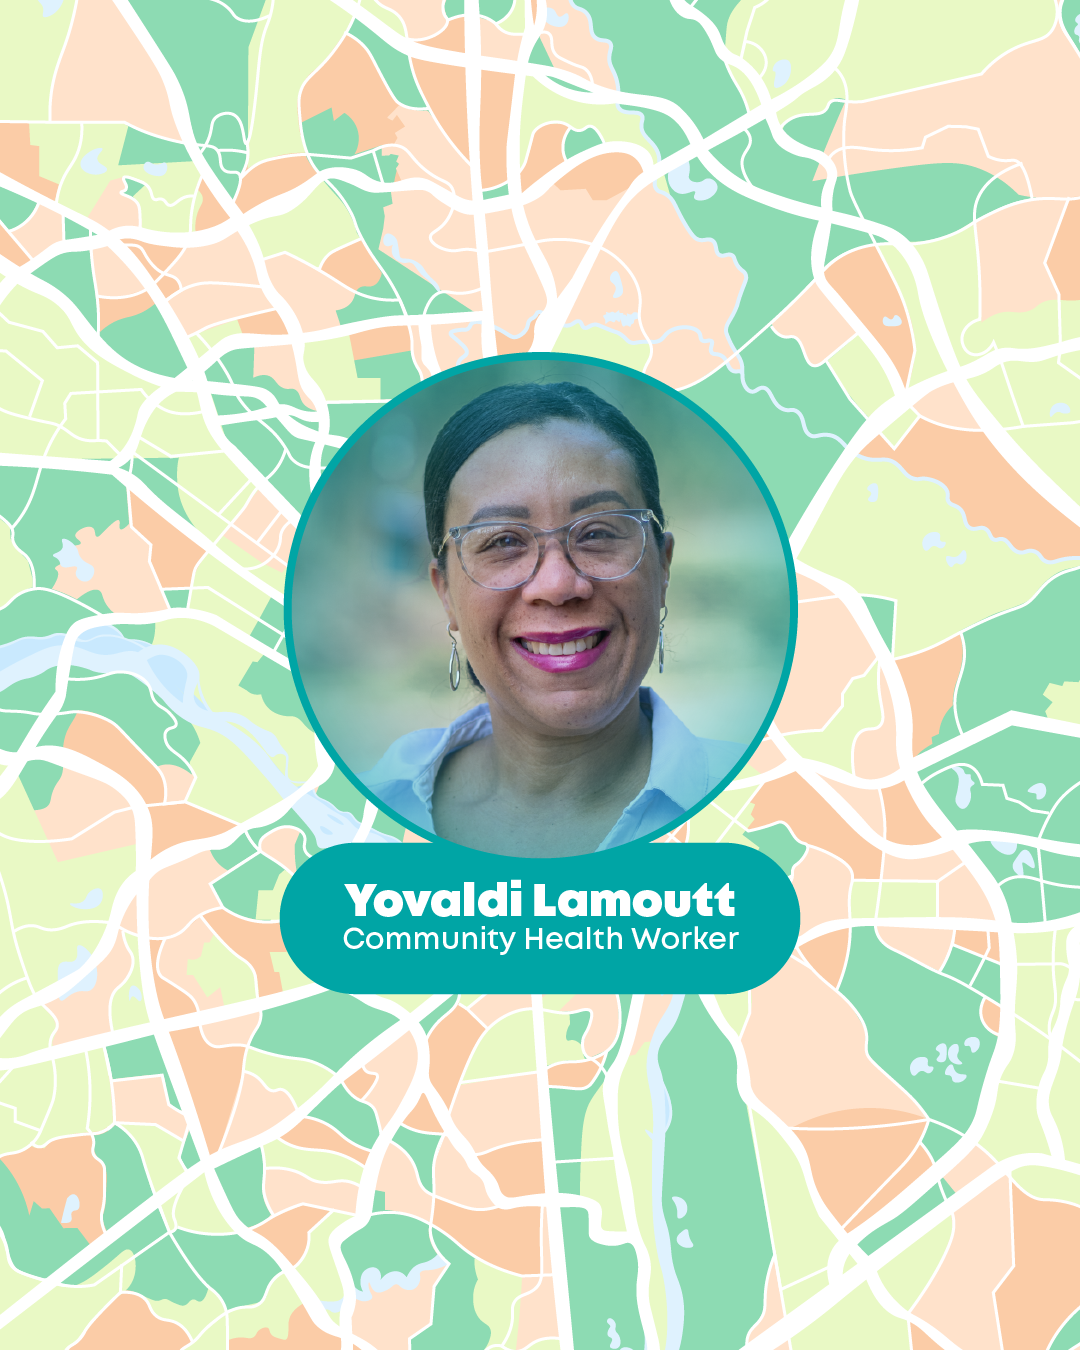 Yovaldi Lamoutt from the Richmond City Health Department